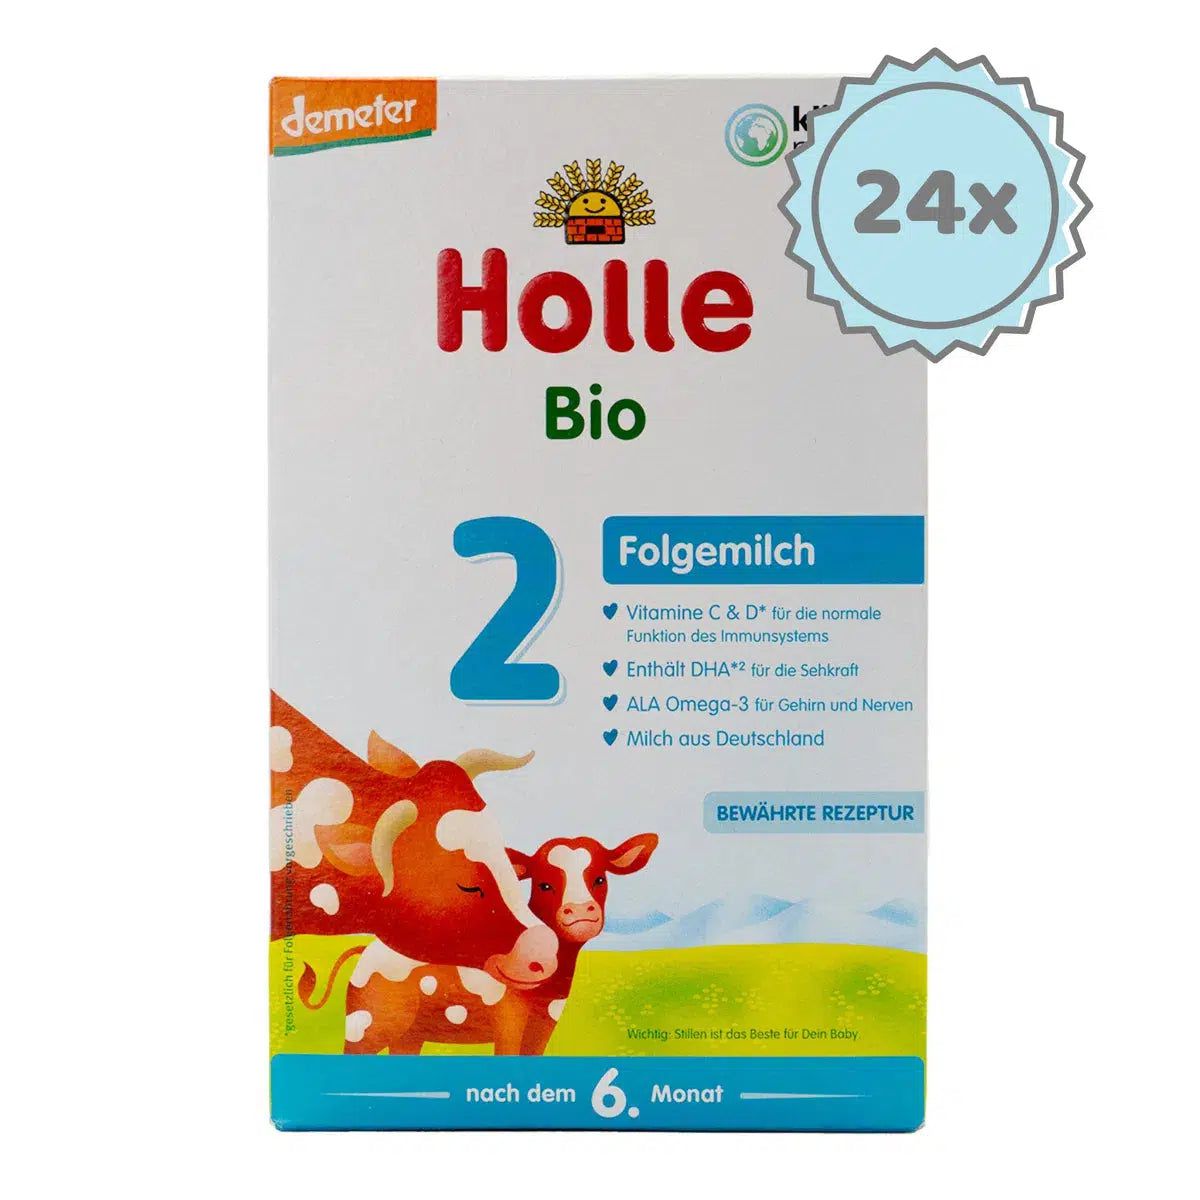 HiPP German Stage 3 Organic Combiotic Formula (10+ Months) 600g – Mommy  Formula